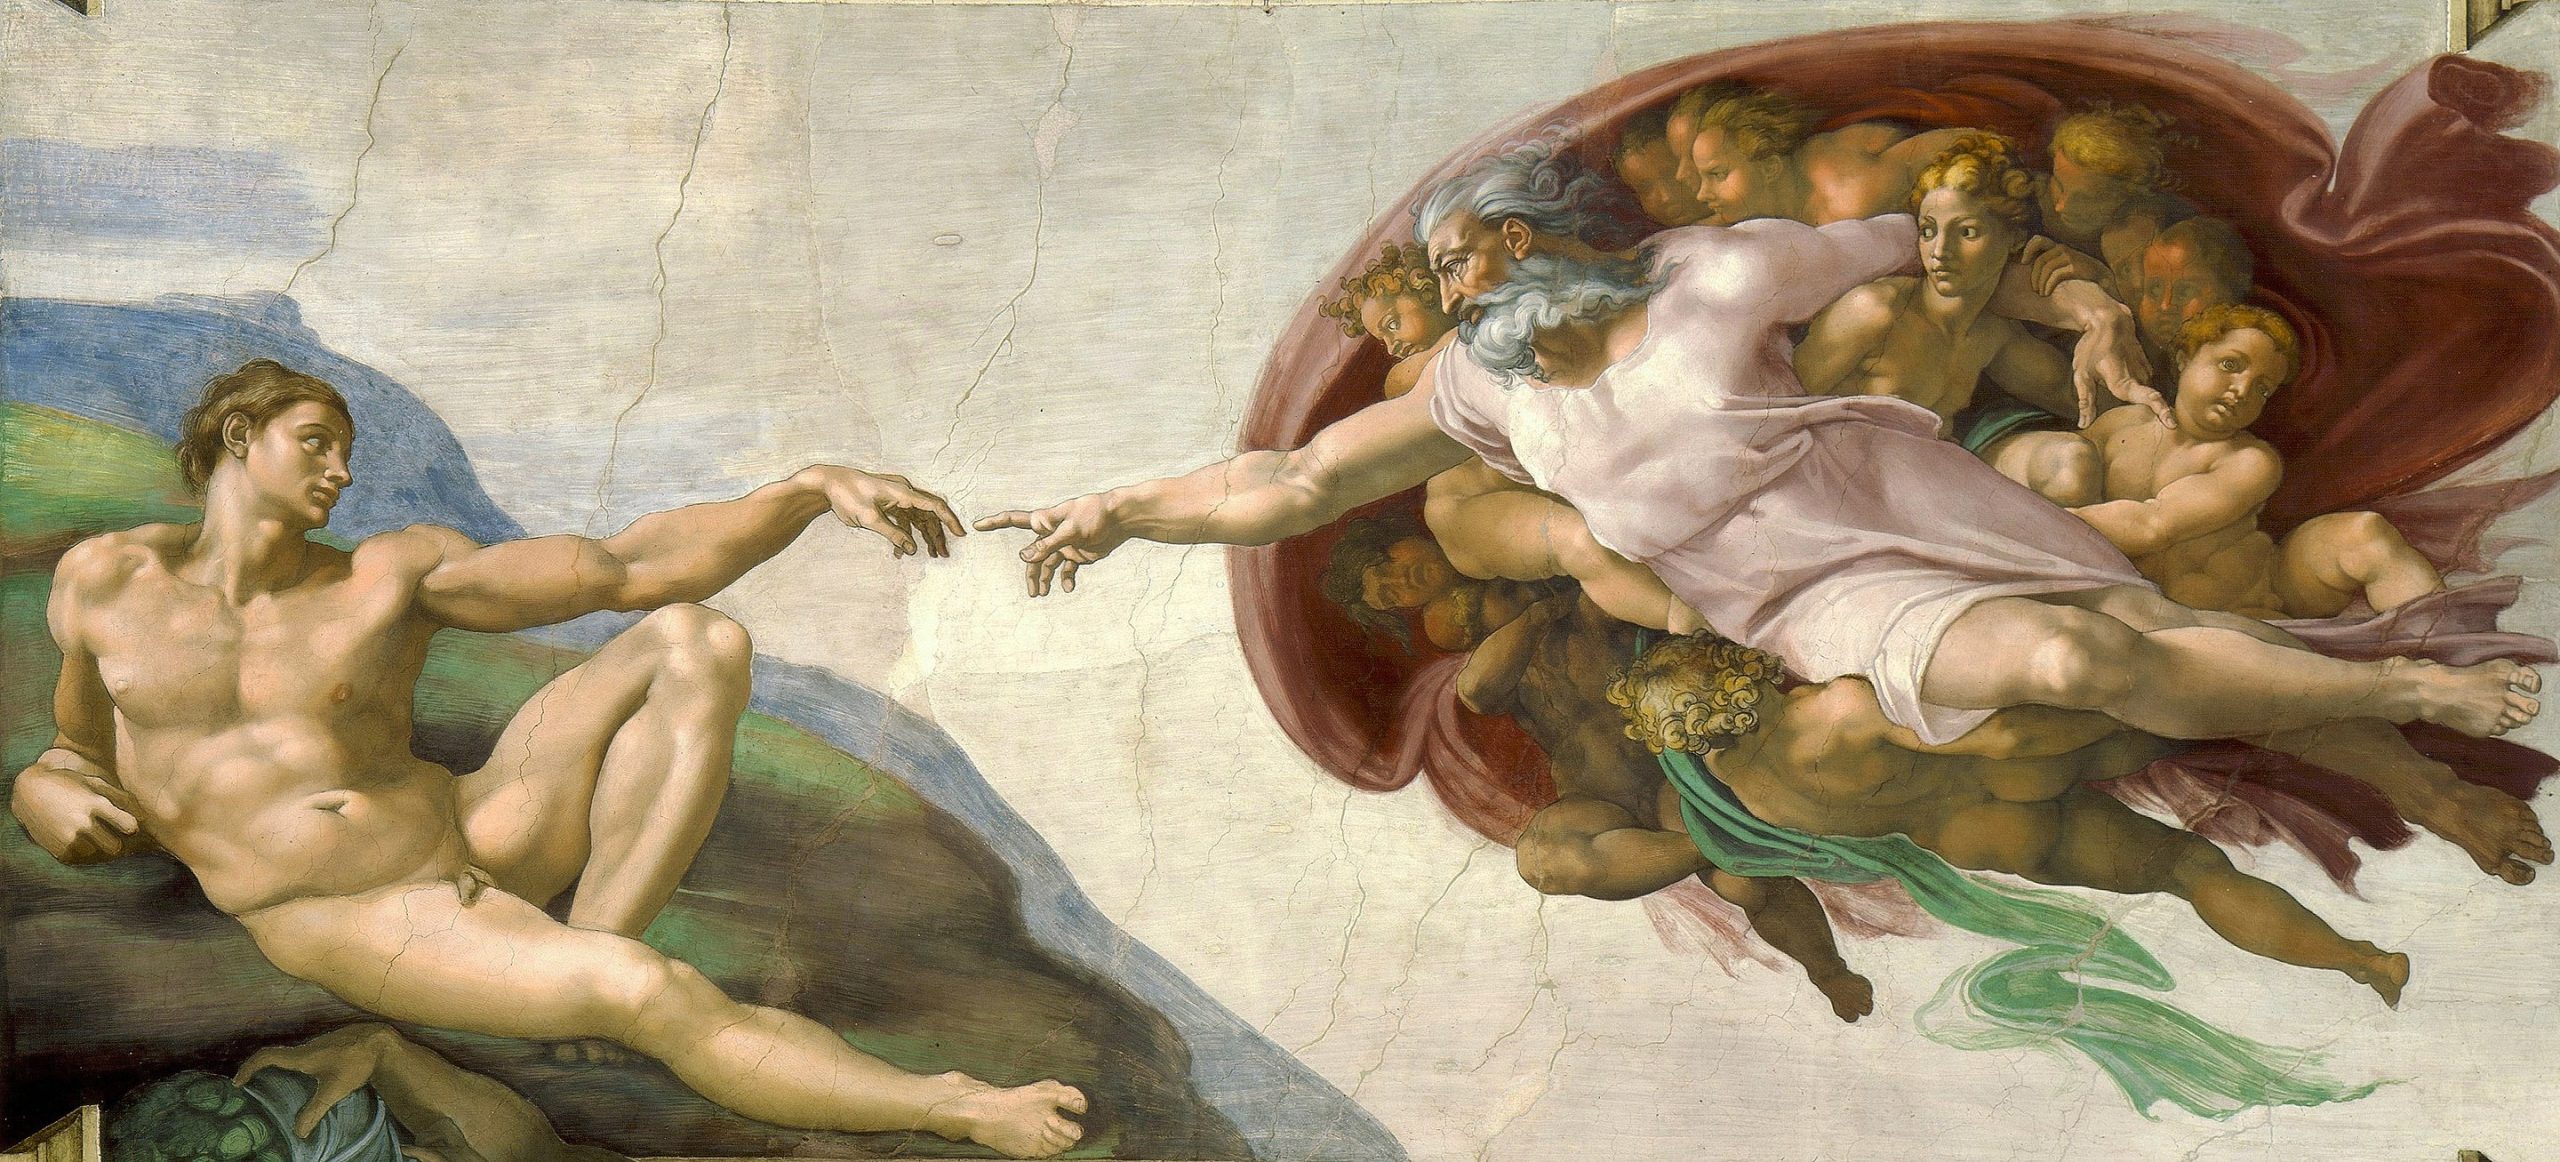 Michelangelo - Creation of Adam (cropped).jpg